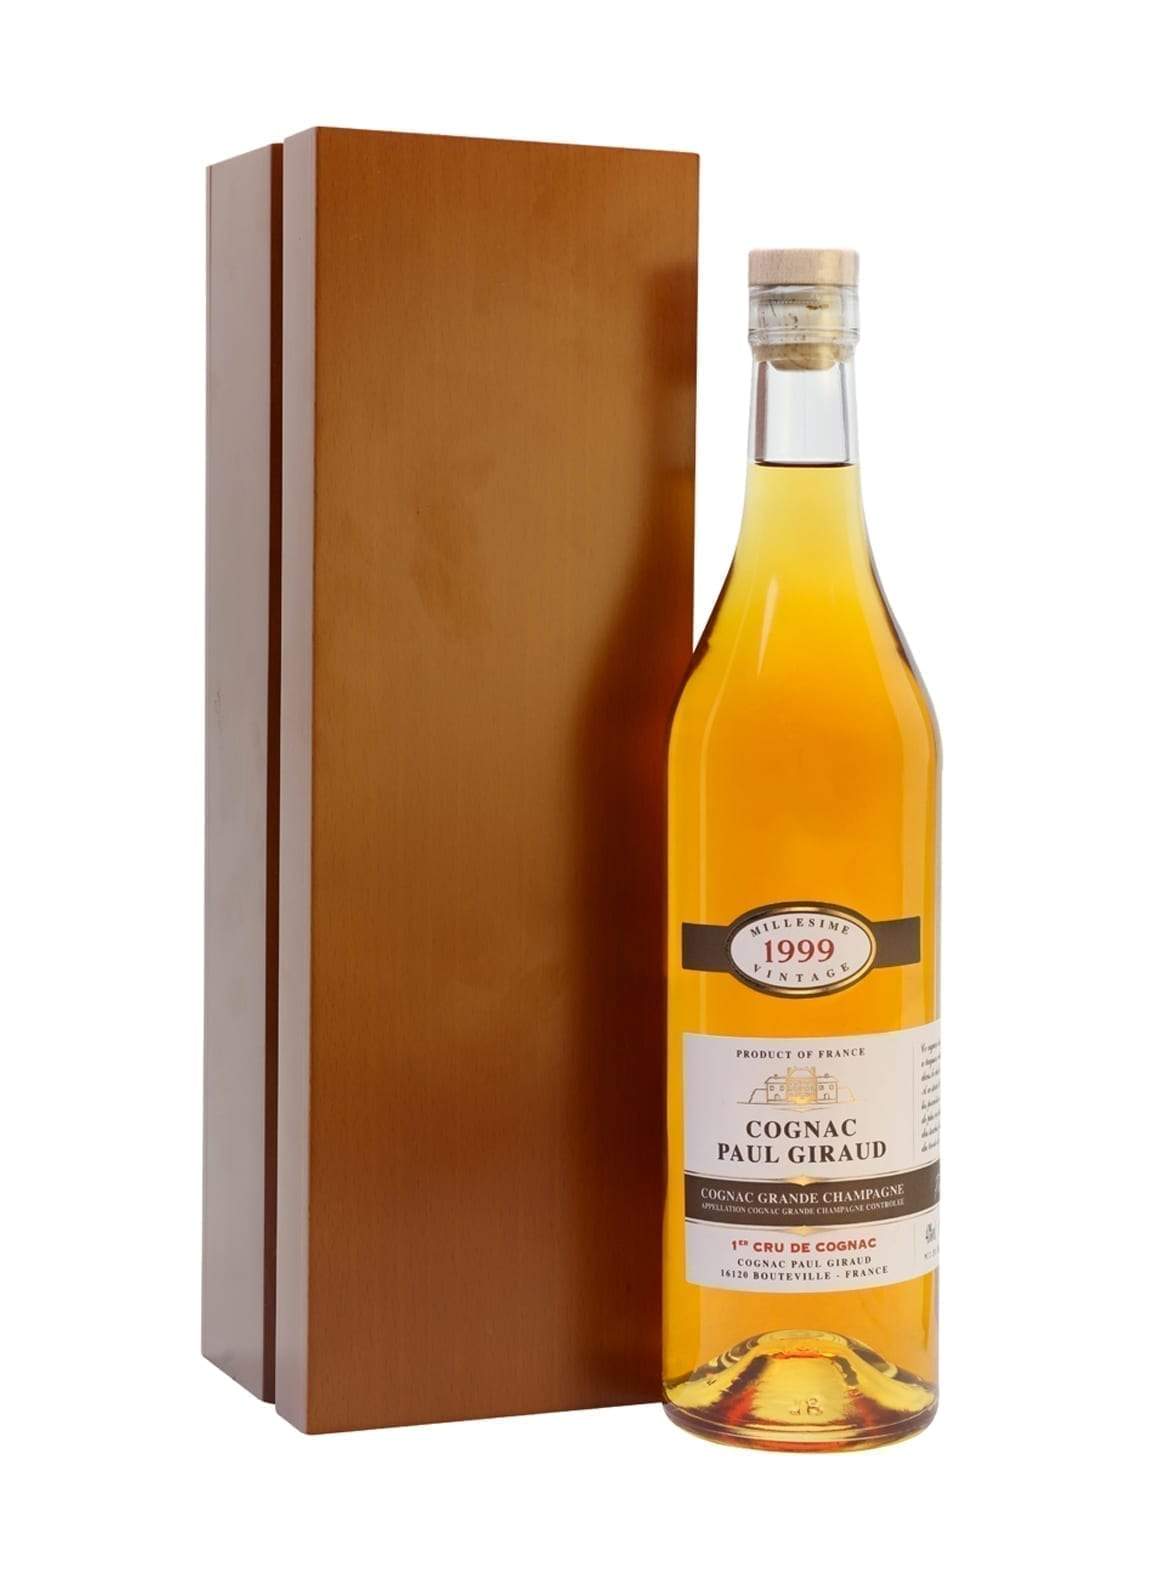 Paul Giraud Cognac 1999 40% 700ml | Brandy | Shop online at Spirits of France